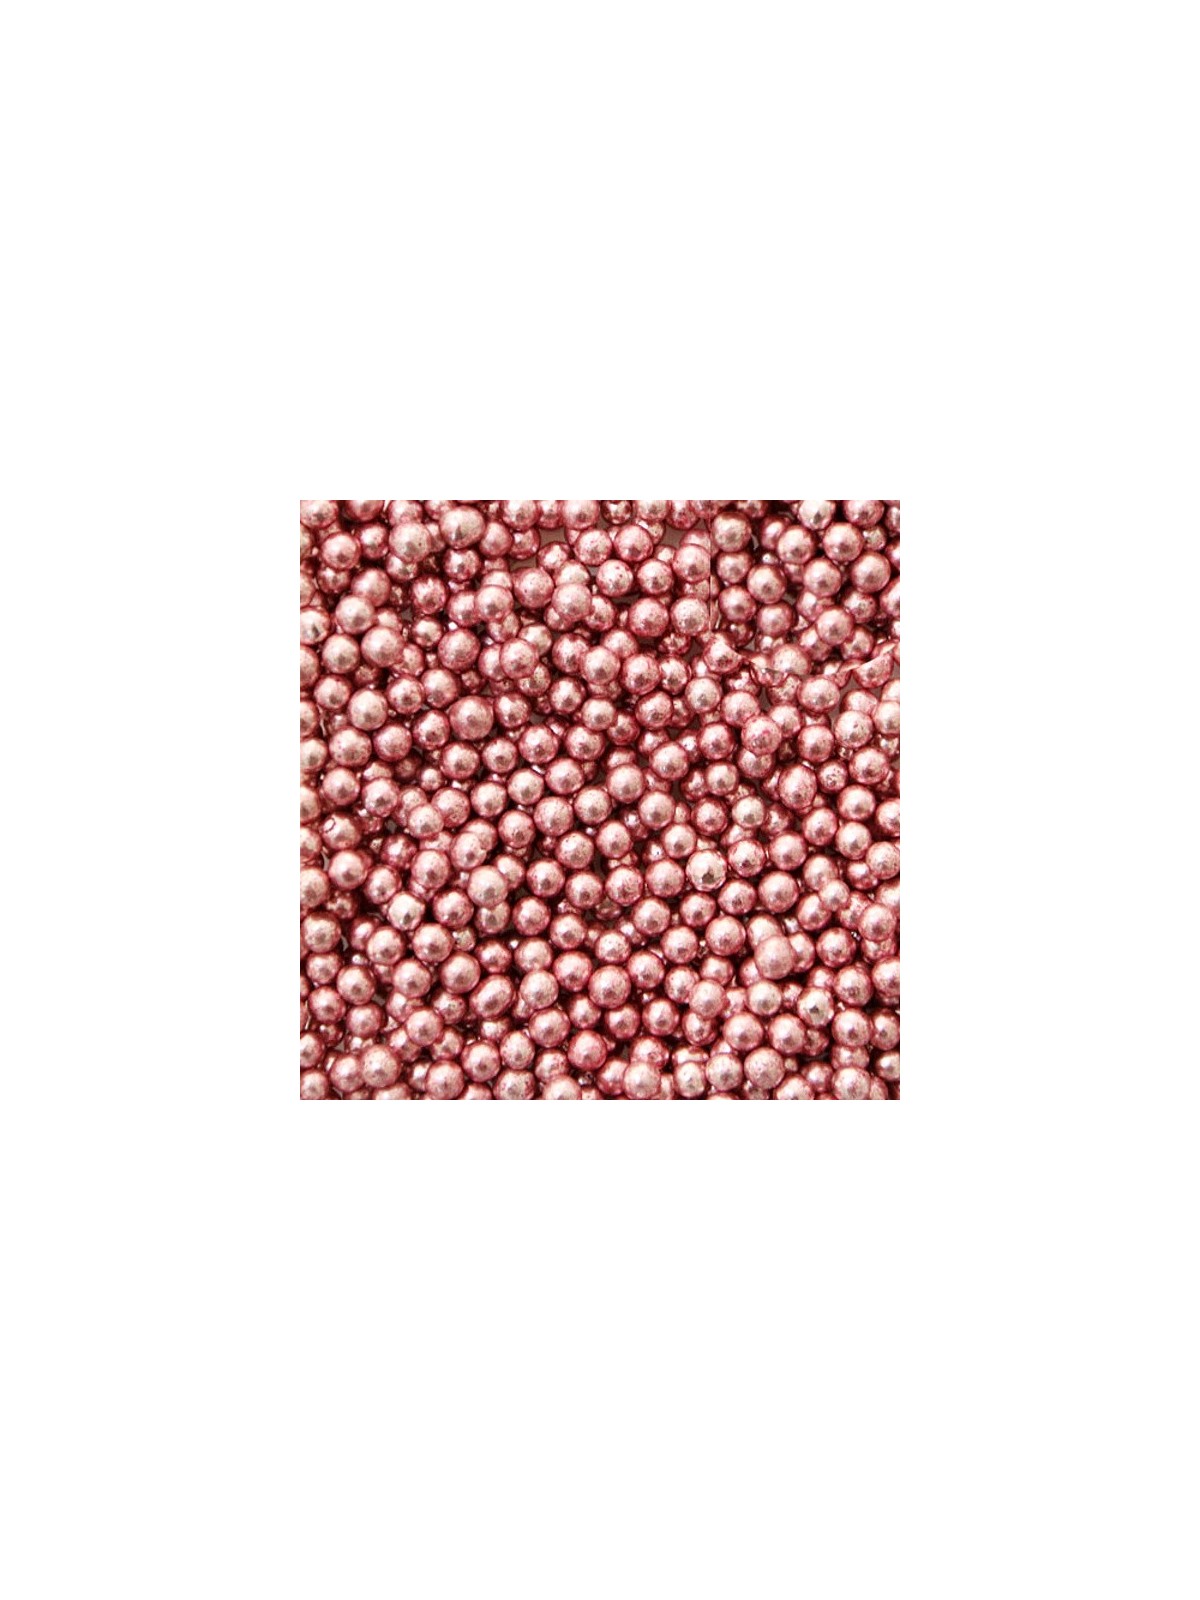 Cukrové perličky 3-4mm - metalická starorůžová - 100g